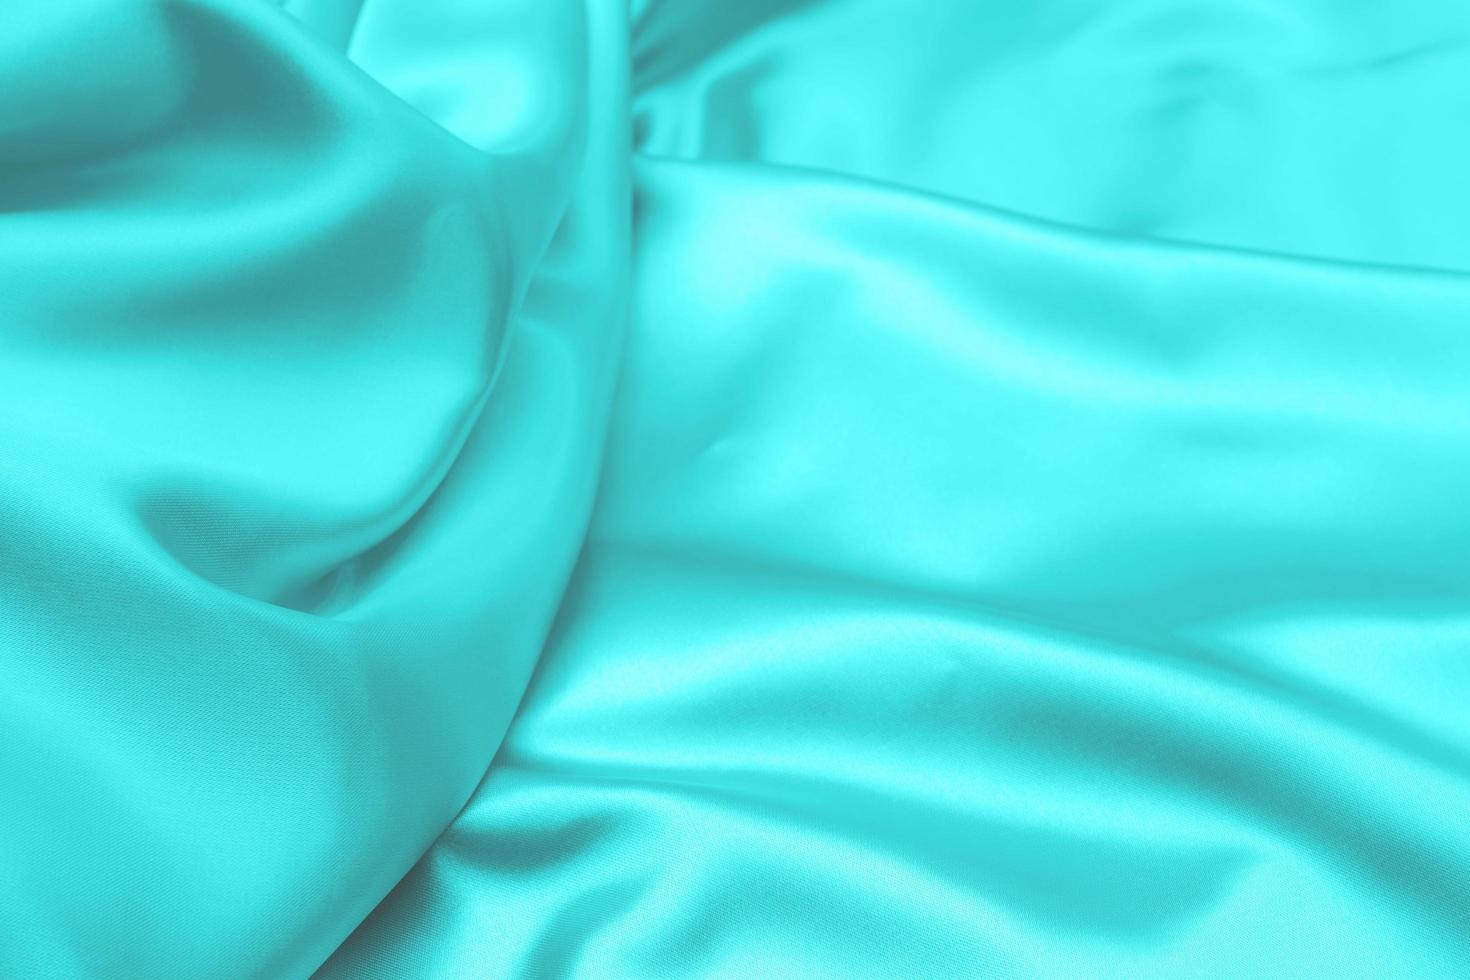 Cyan-Teal satin fabric texture soft background photo